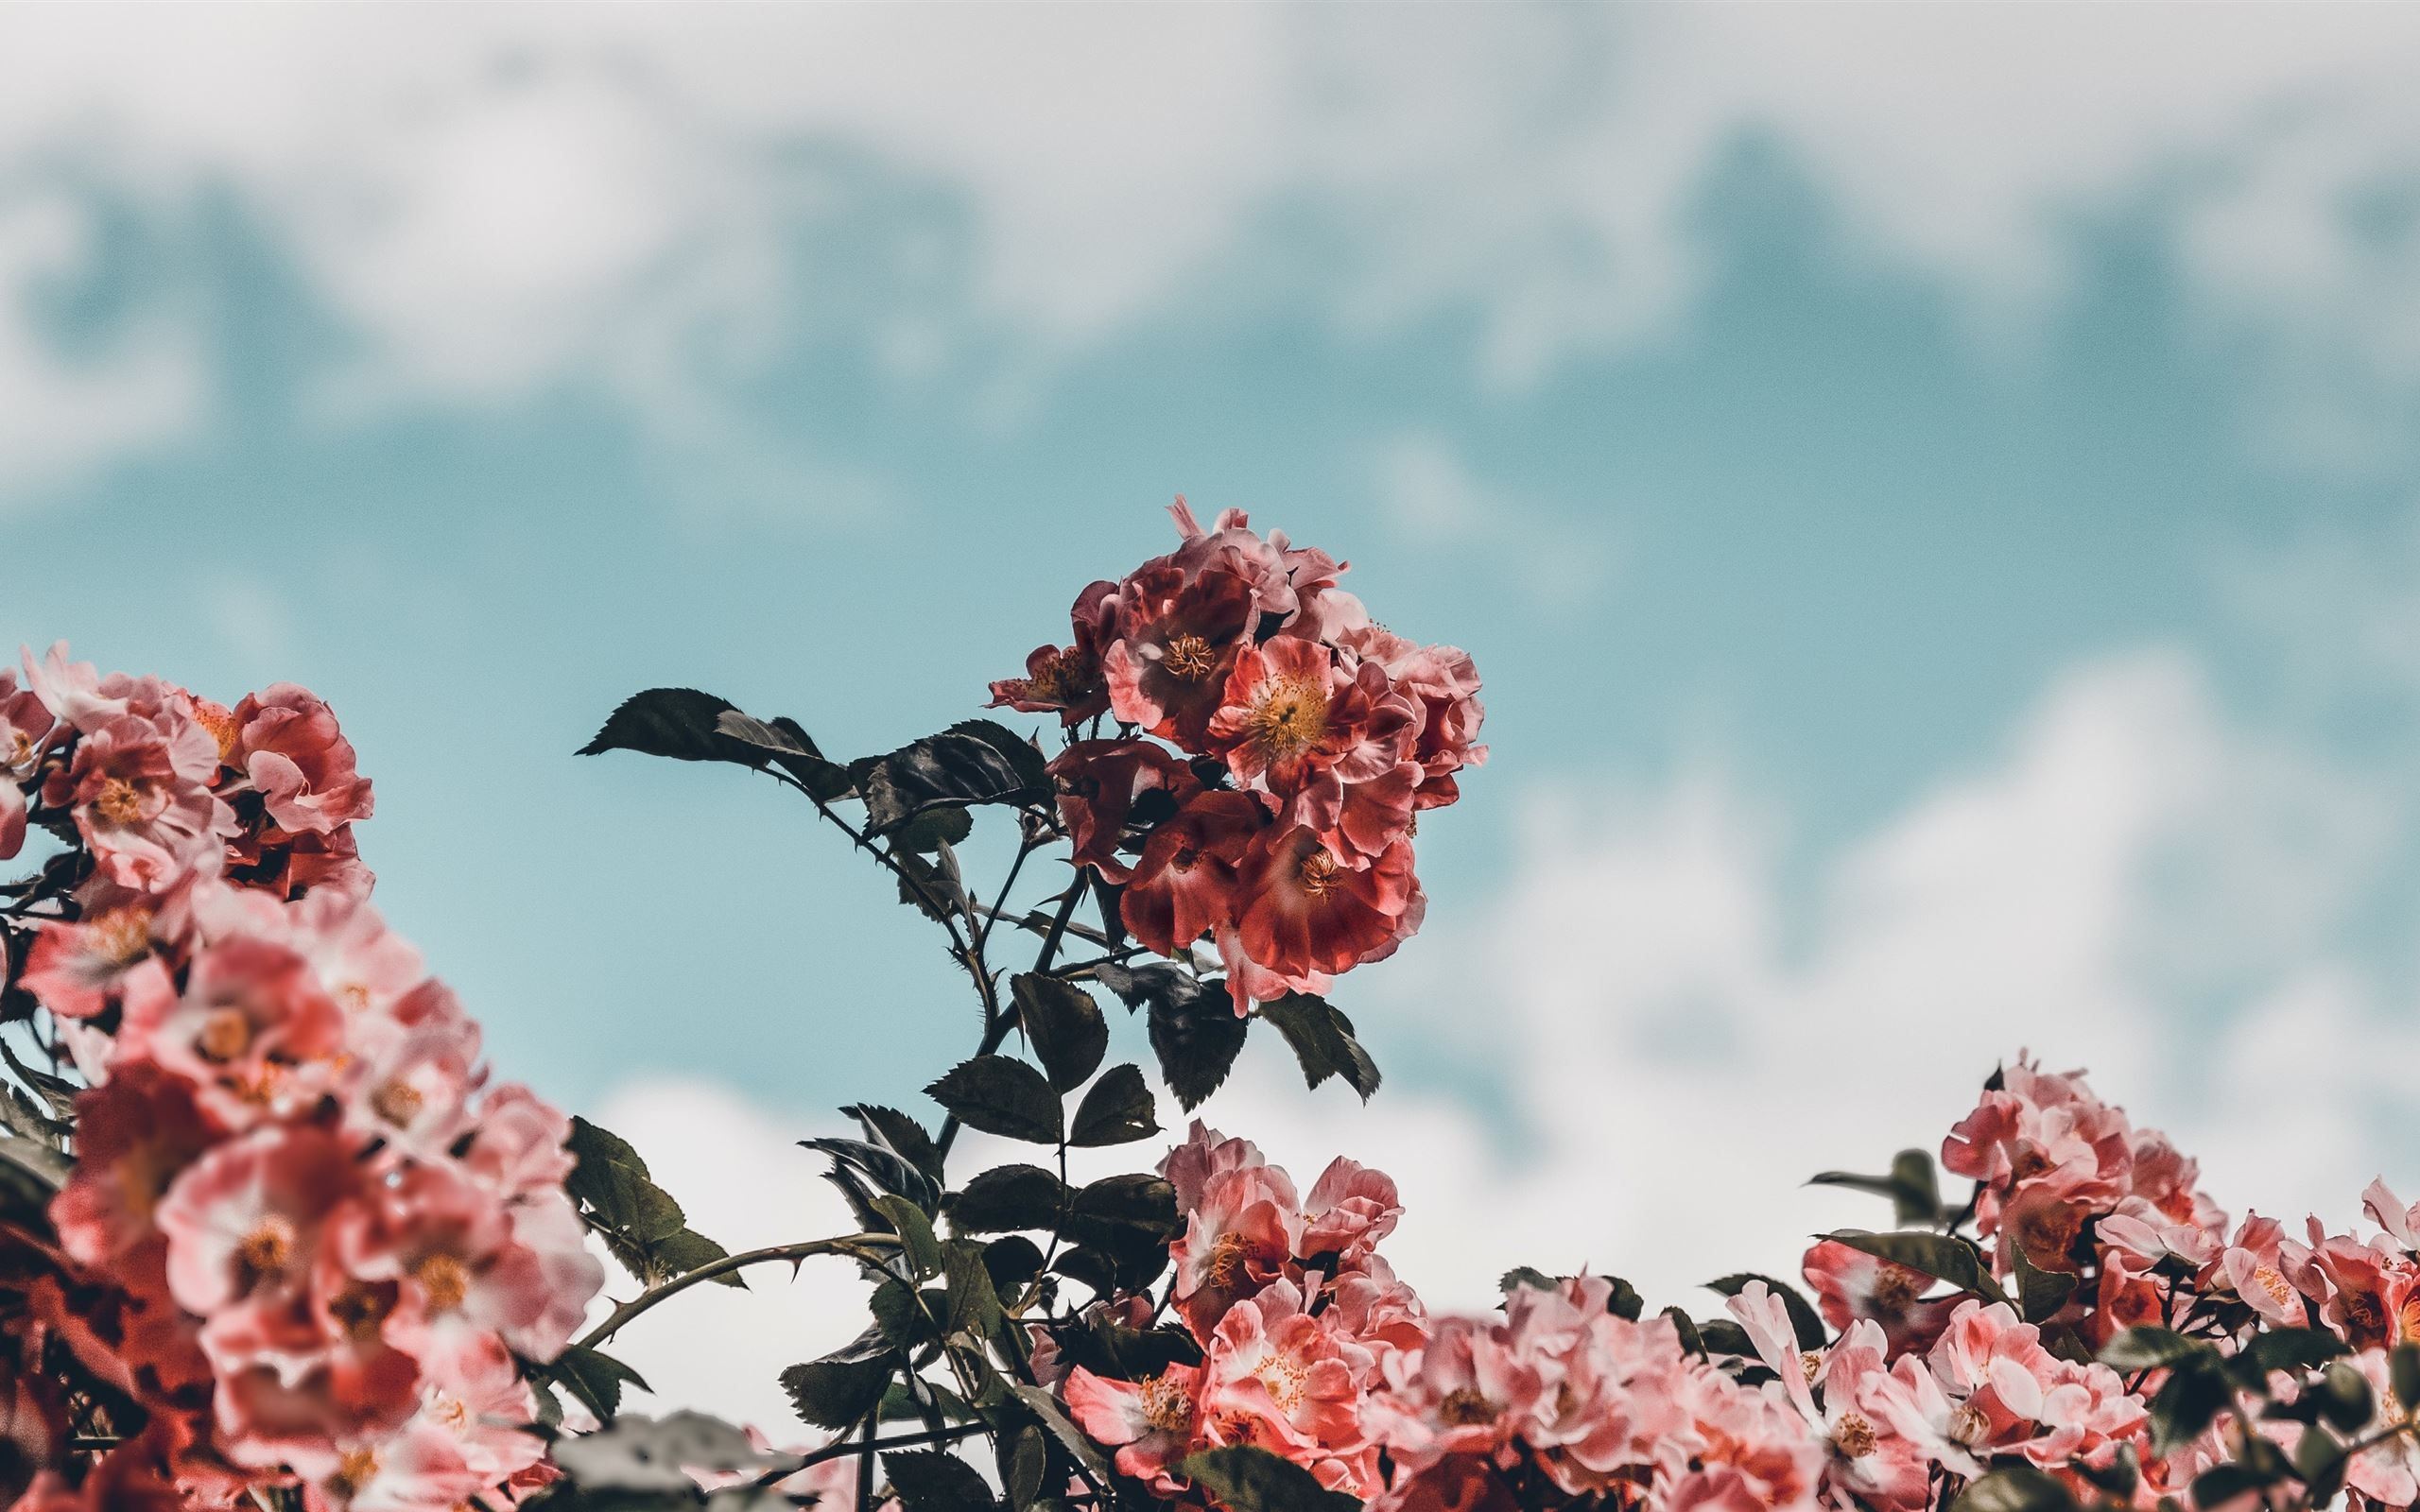 Pink flowers against a blue sky - IMac